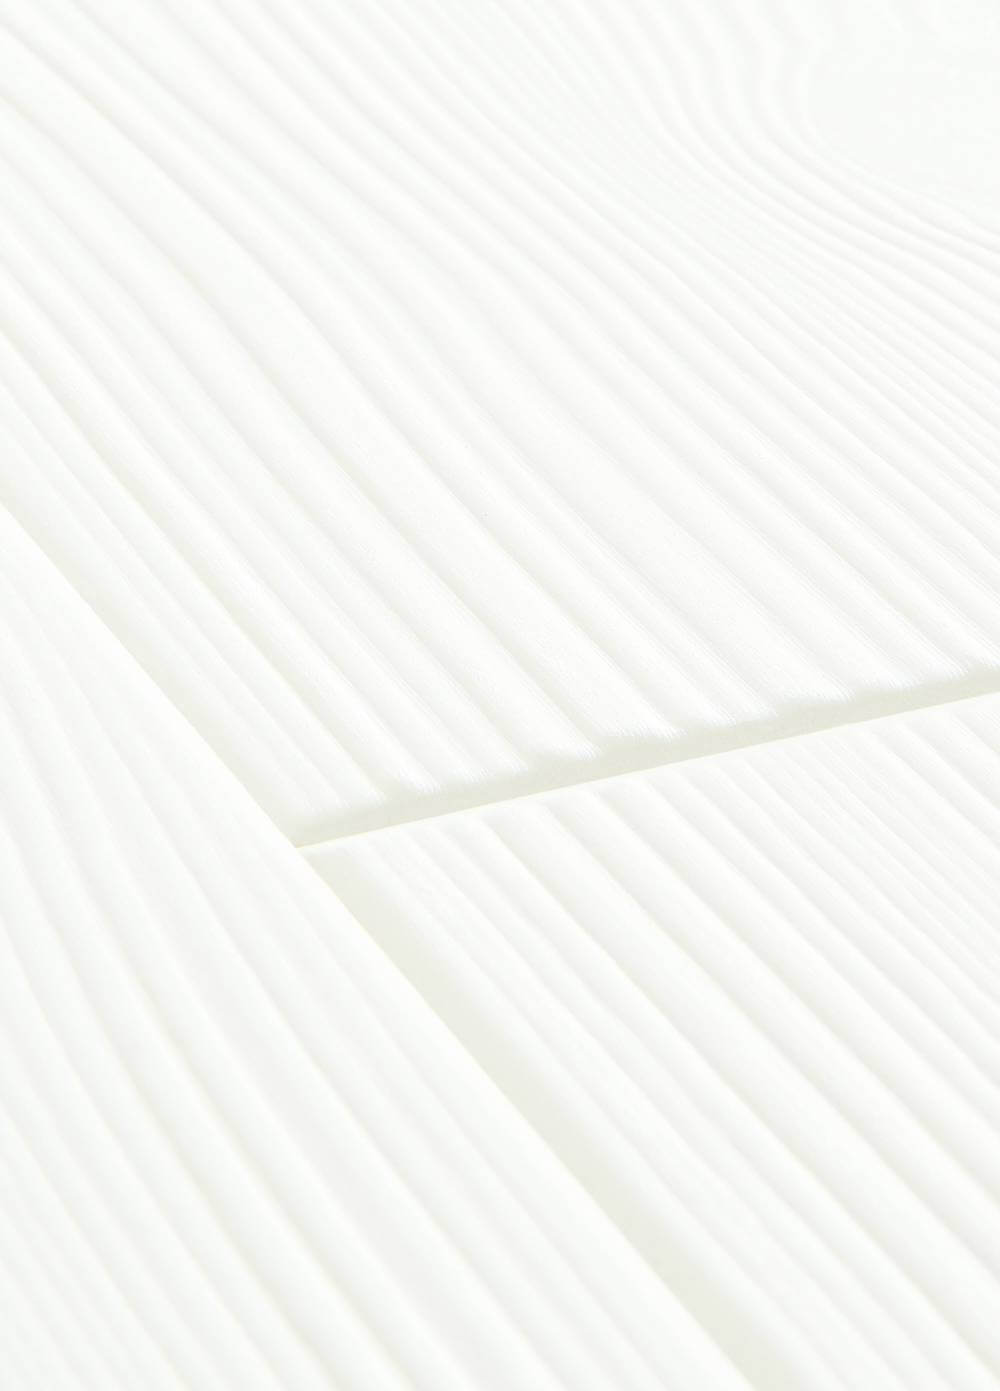 Laminaat Quickstep Impressive Witte Planken IM1859